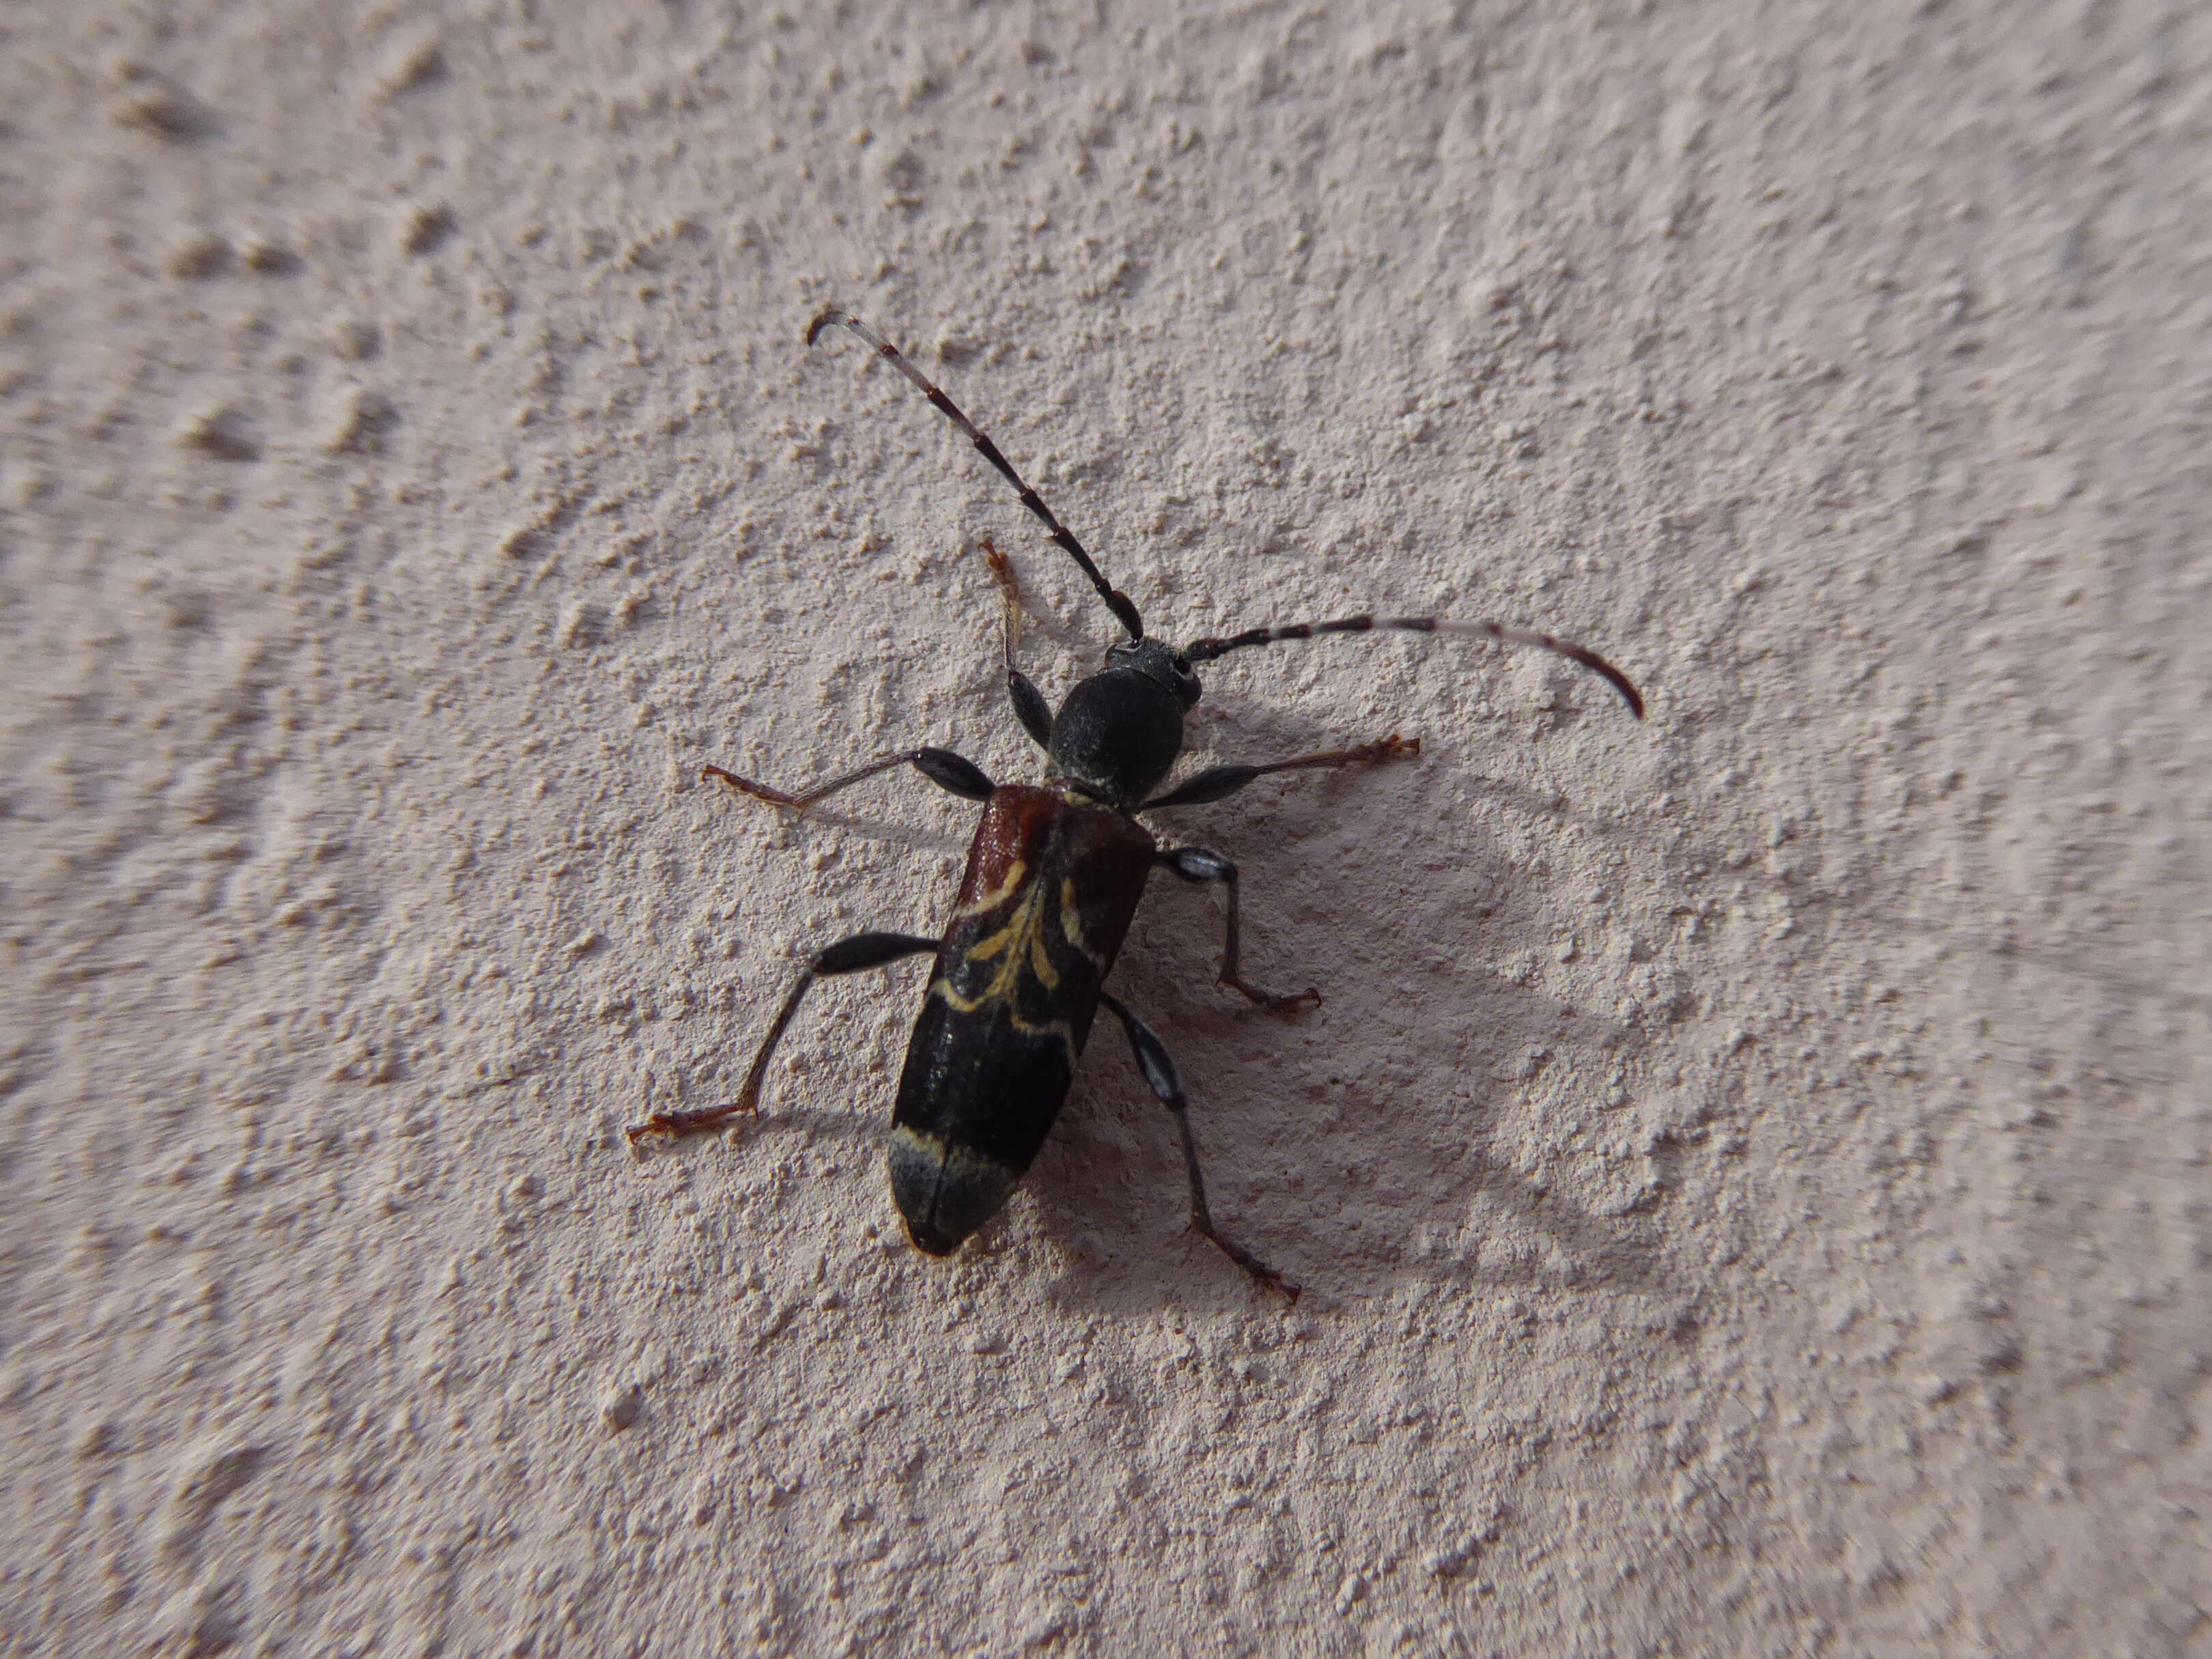 Image of grey-coated longhorn beetle